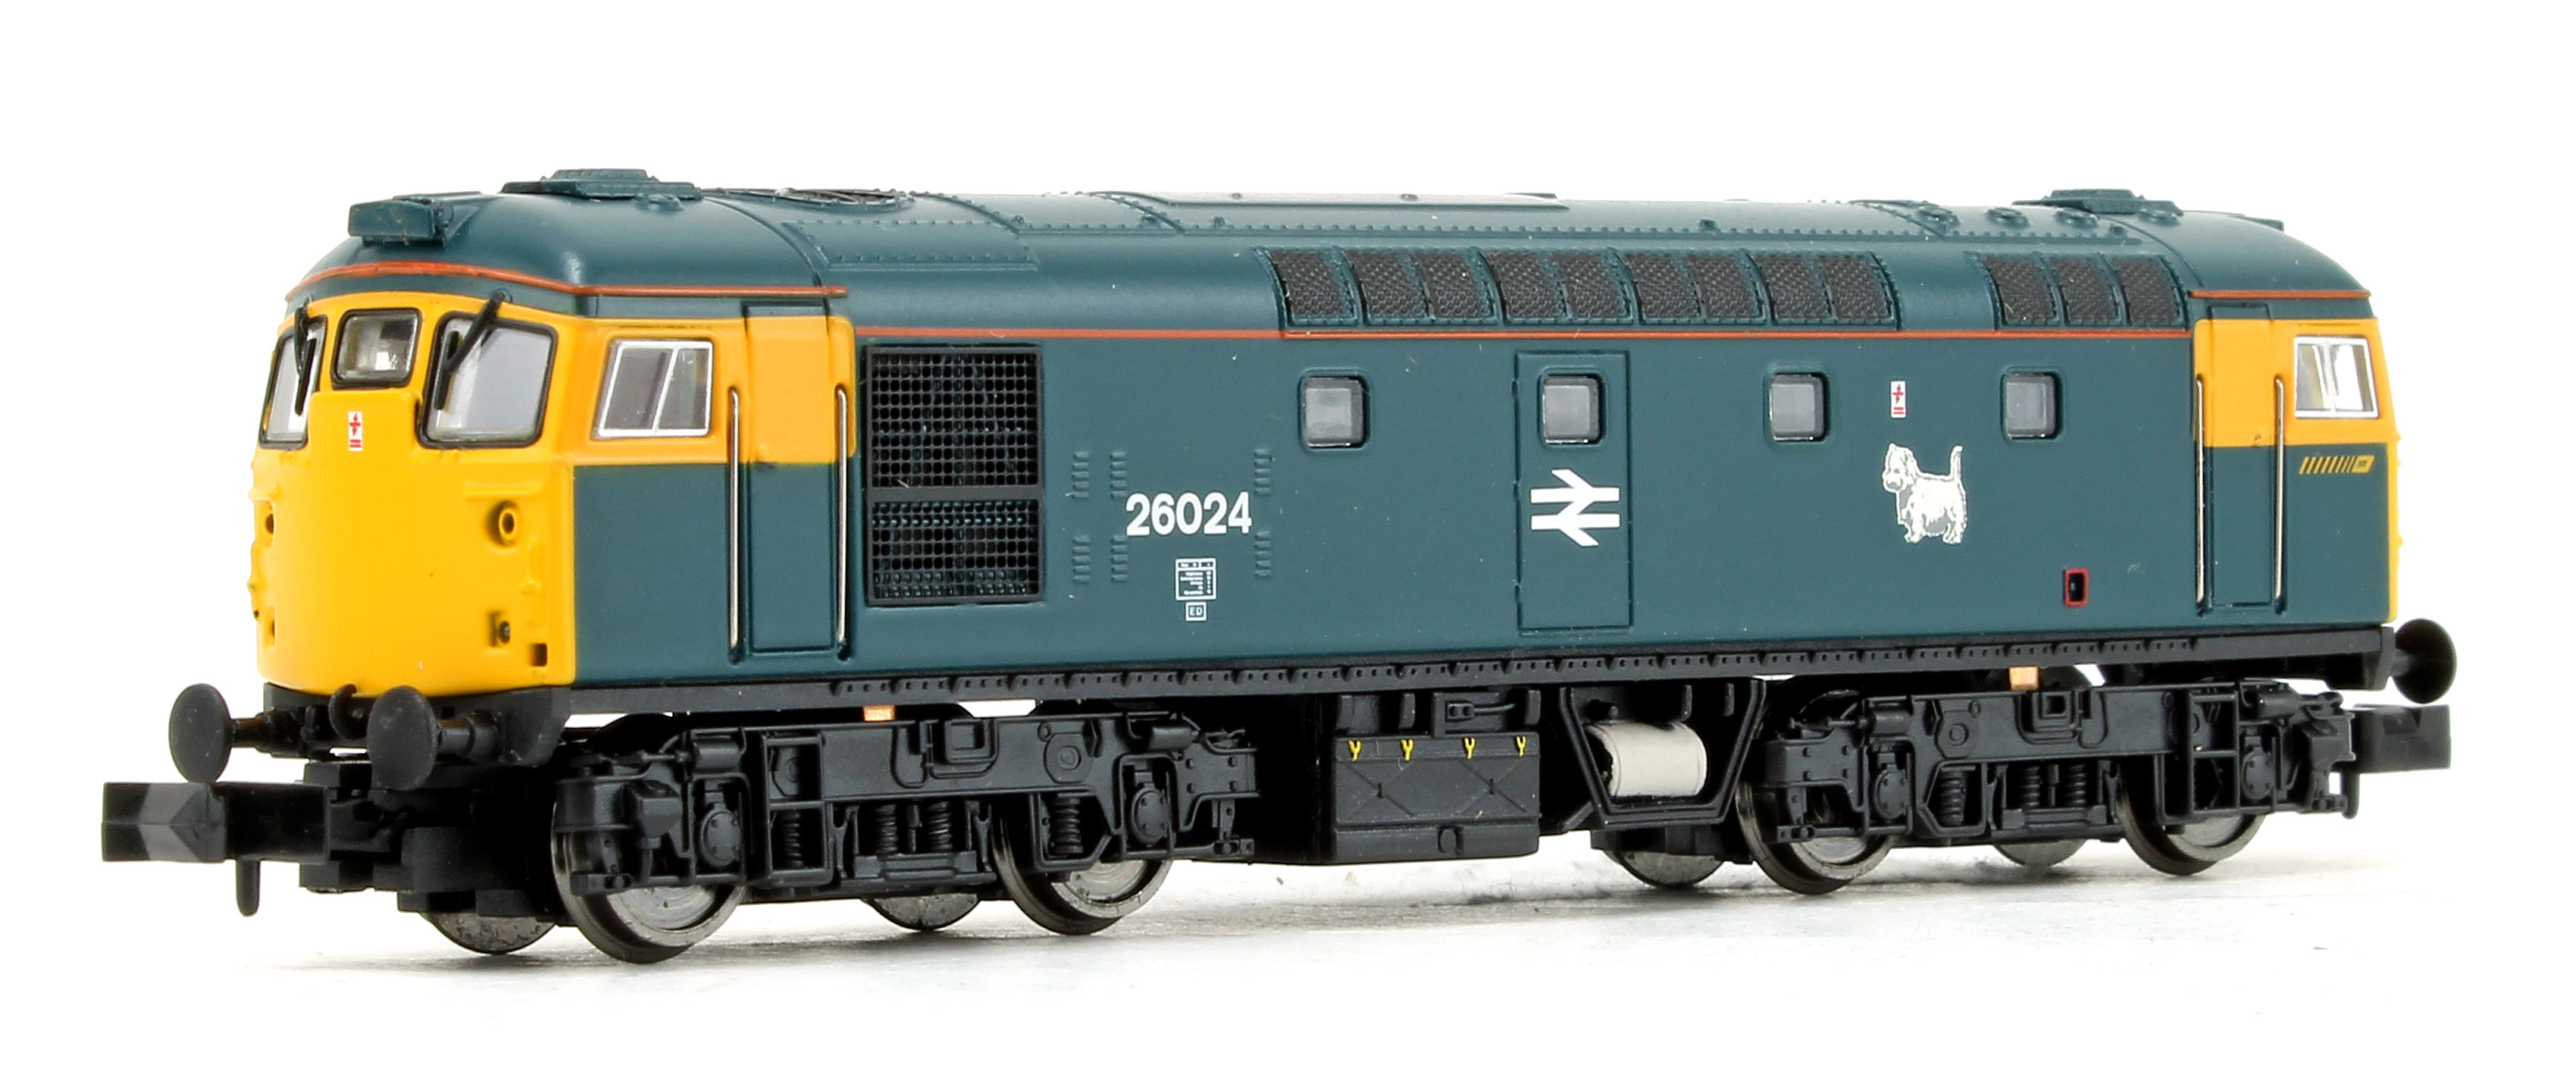 n gauge dcc fitted locomotives